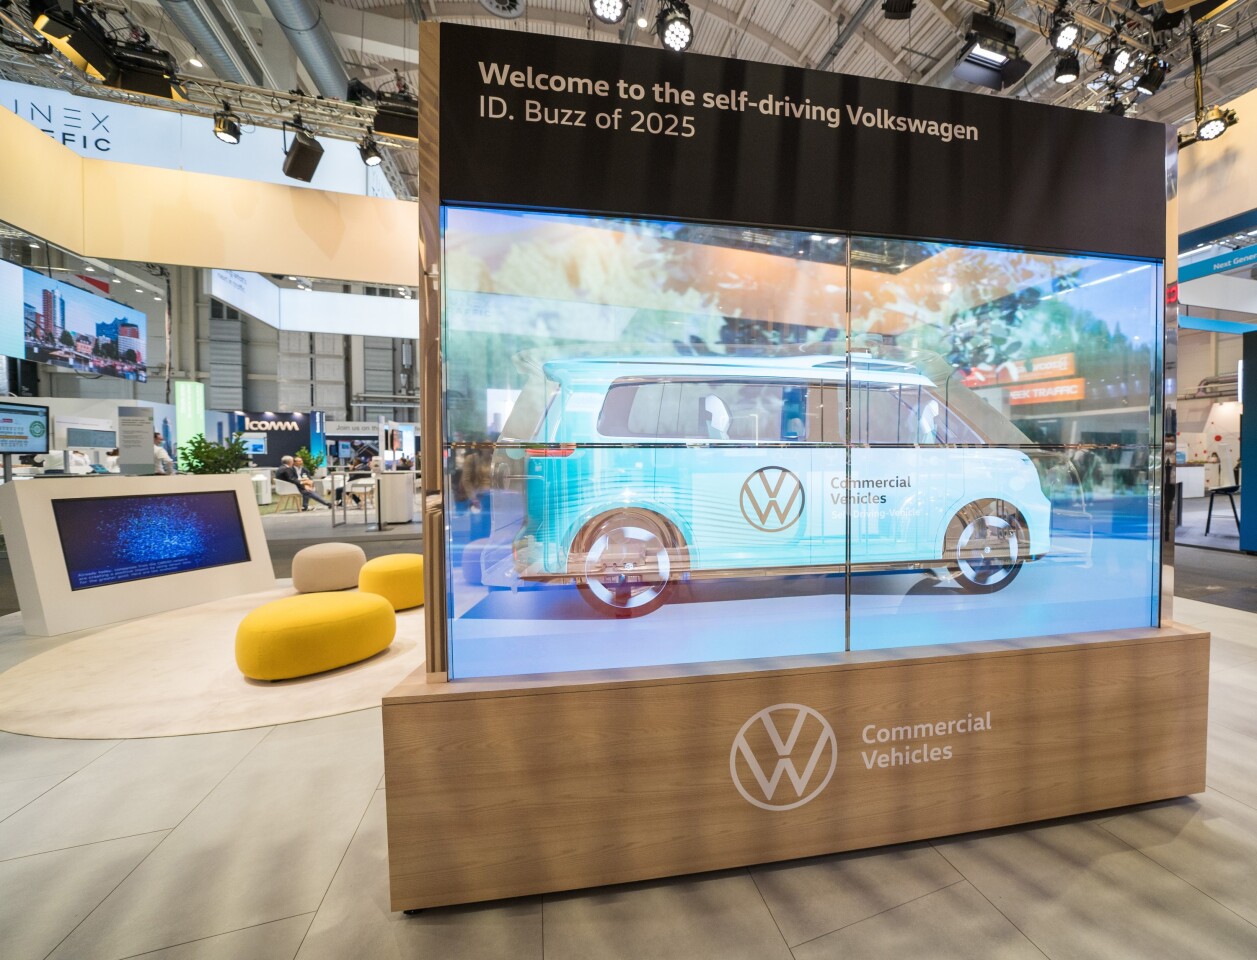 VW spotlights its autonomous ID. Buzz plans at the 2021 ITS World Congress in October